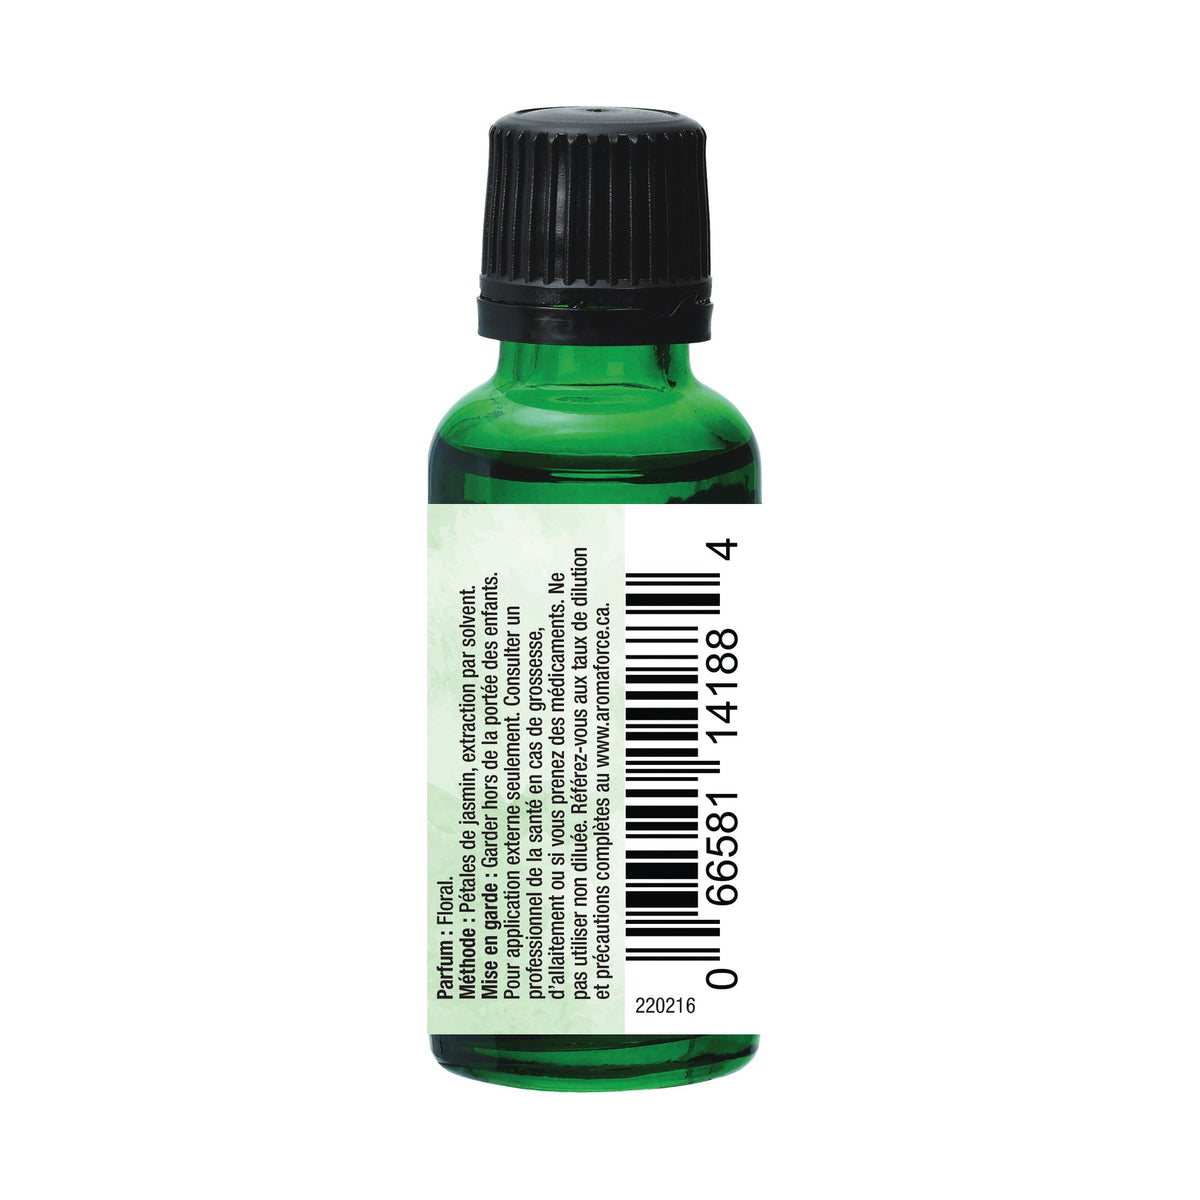 Jasmine Absolute Essential Oil in Jojoba Oil Blend 15mL - Aromaforce - A.Vogel Canada